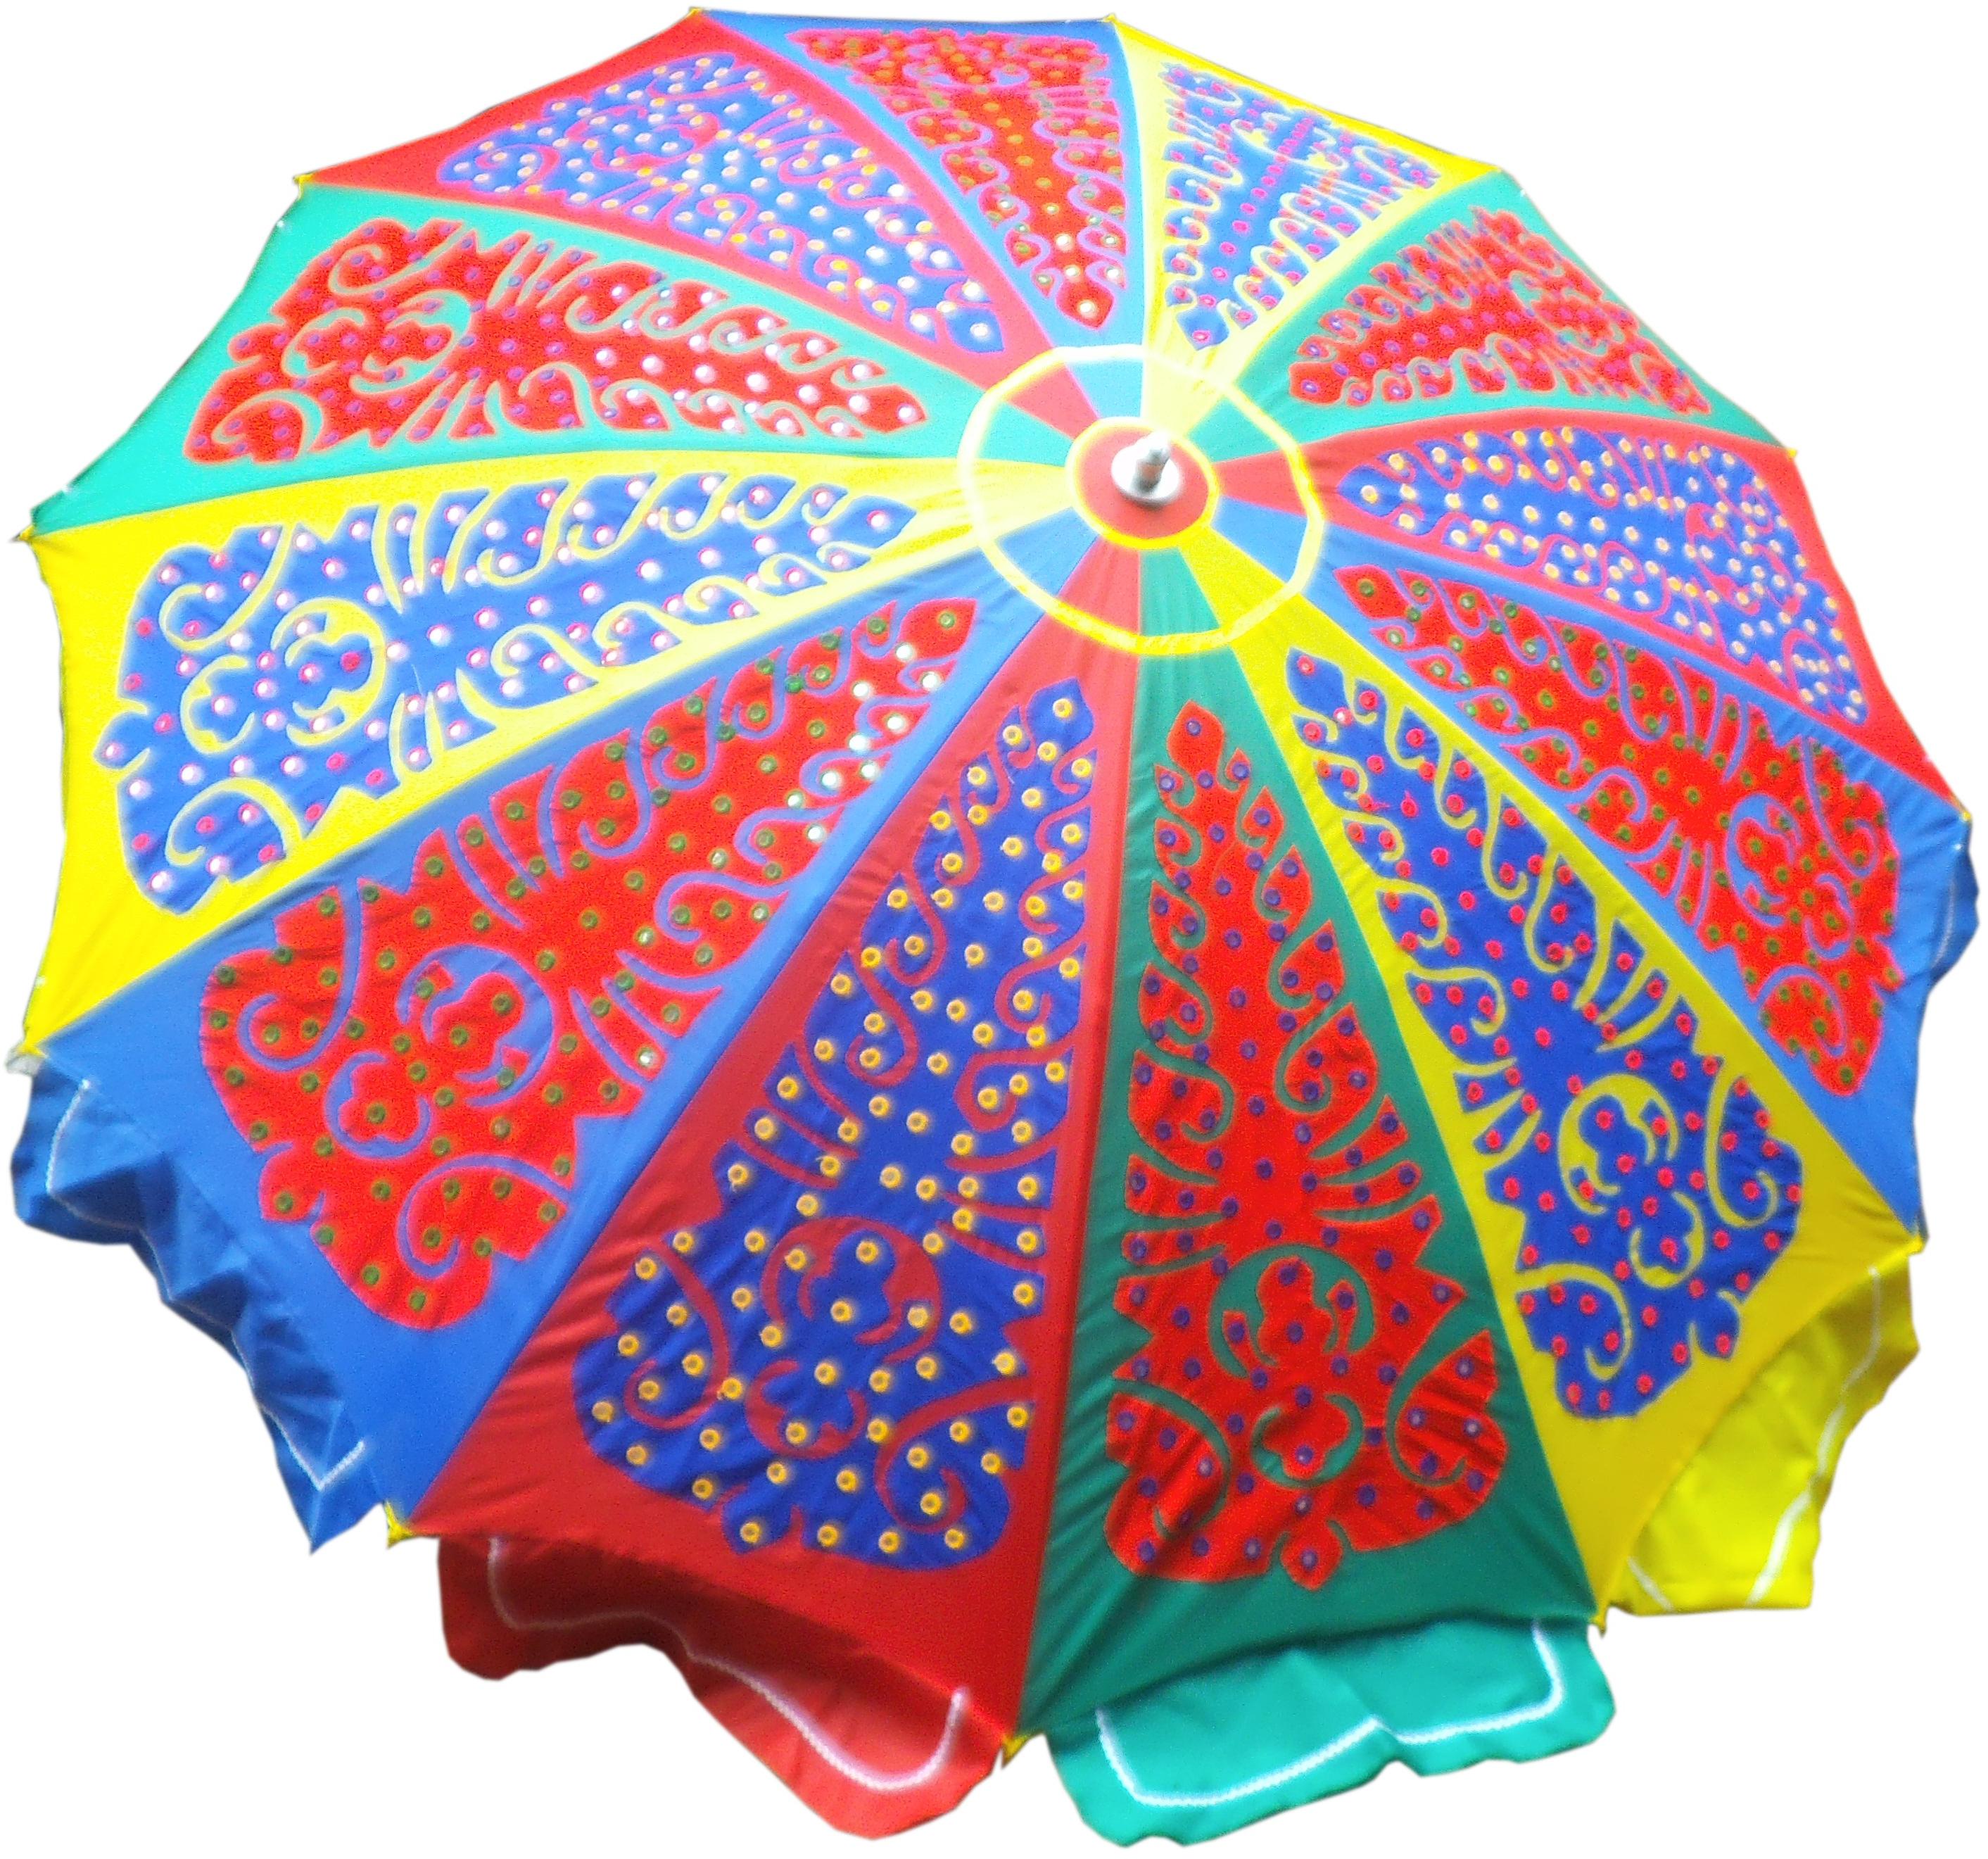 Decorative Garden Umbrella